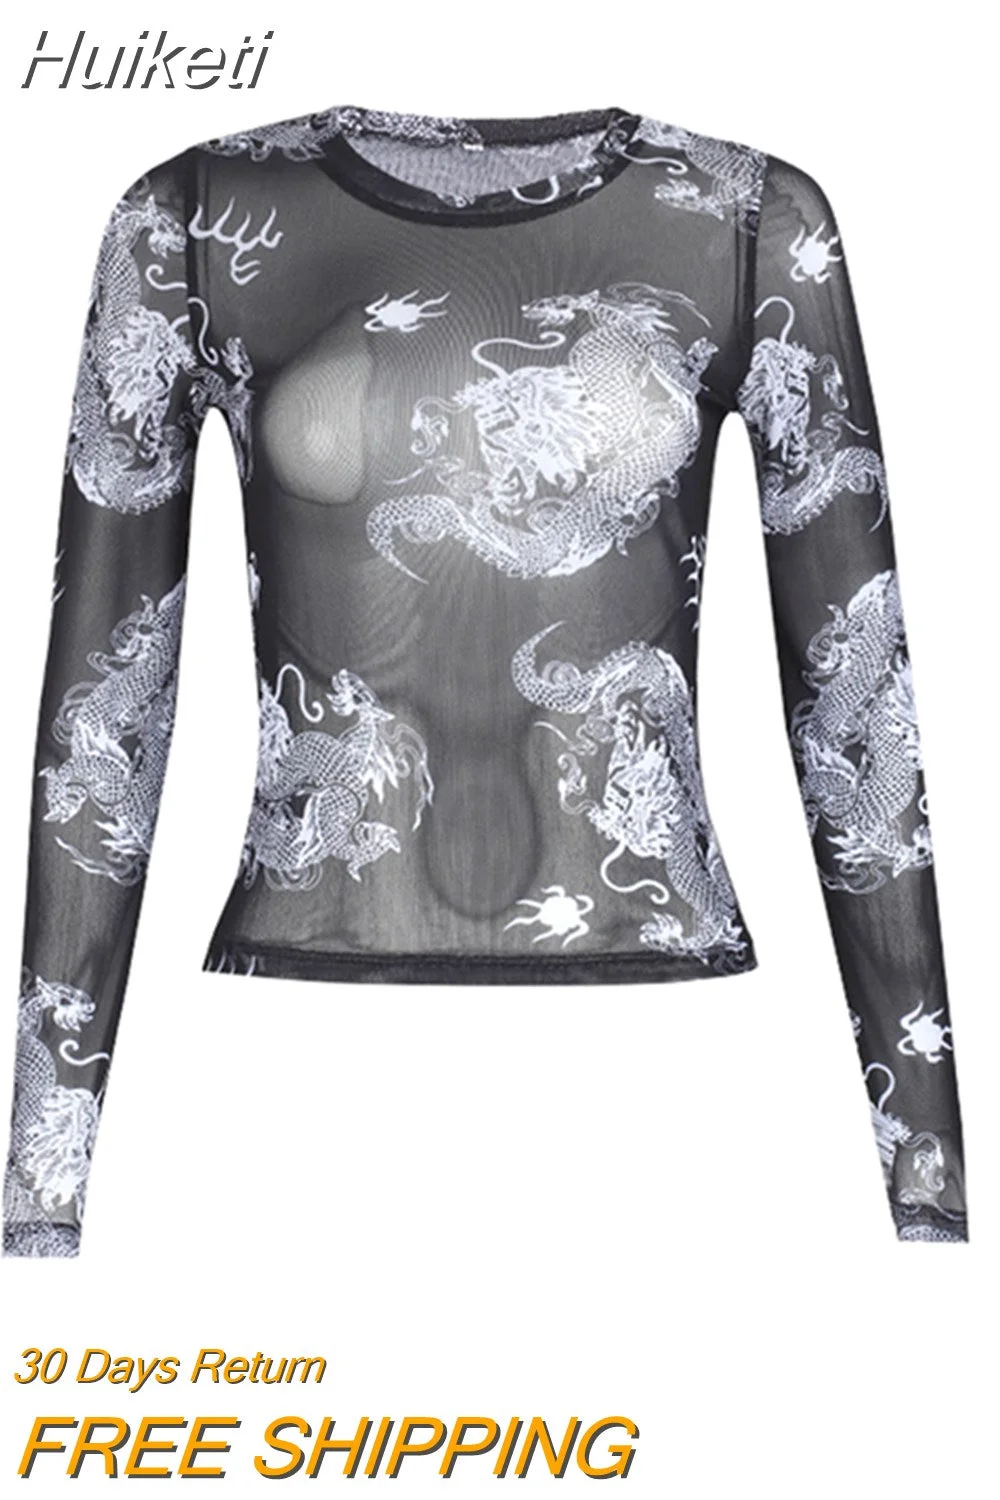 Huiketi Women Adults See-Through Dragon Print Long Sleeve Round Neck Mesh Pullover Autumn Sexy T-Shirt Black Skin-Friendly Fashion S M L